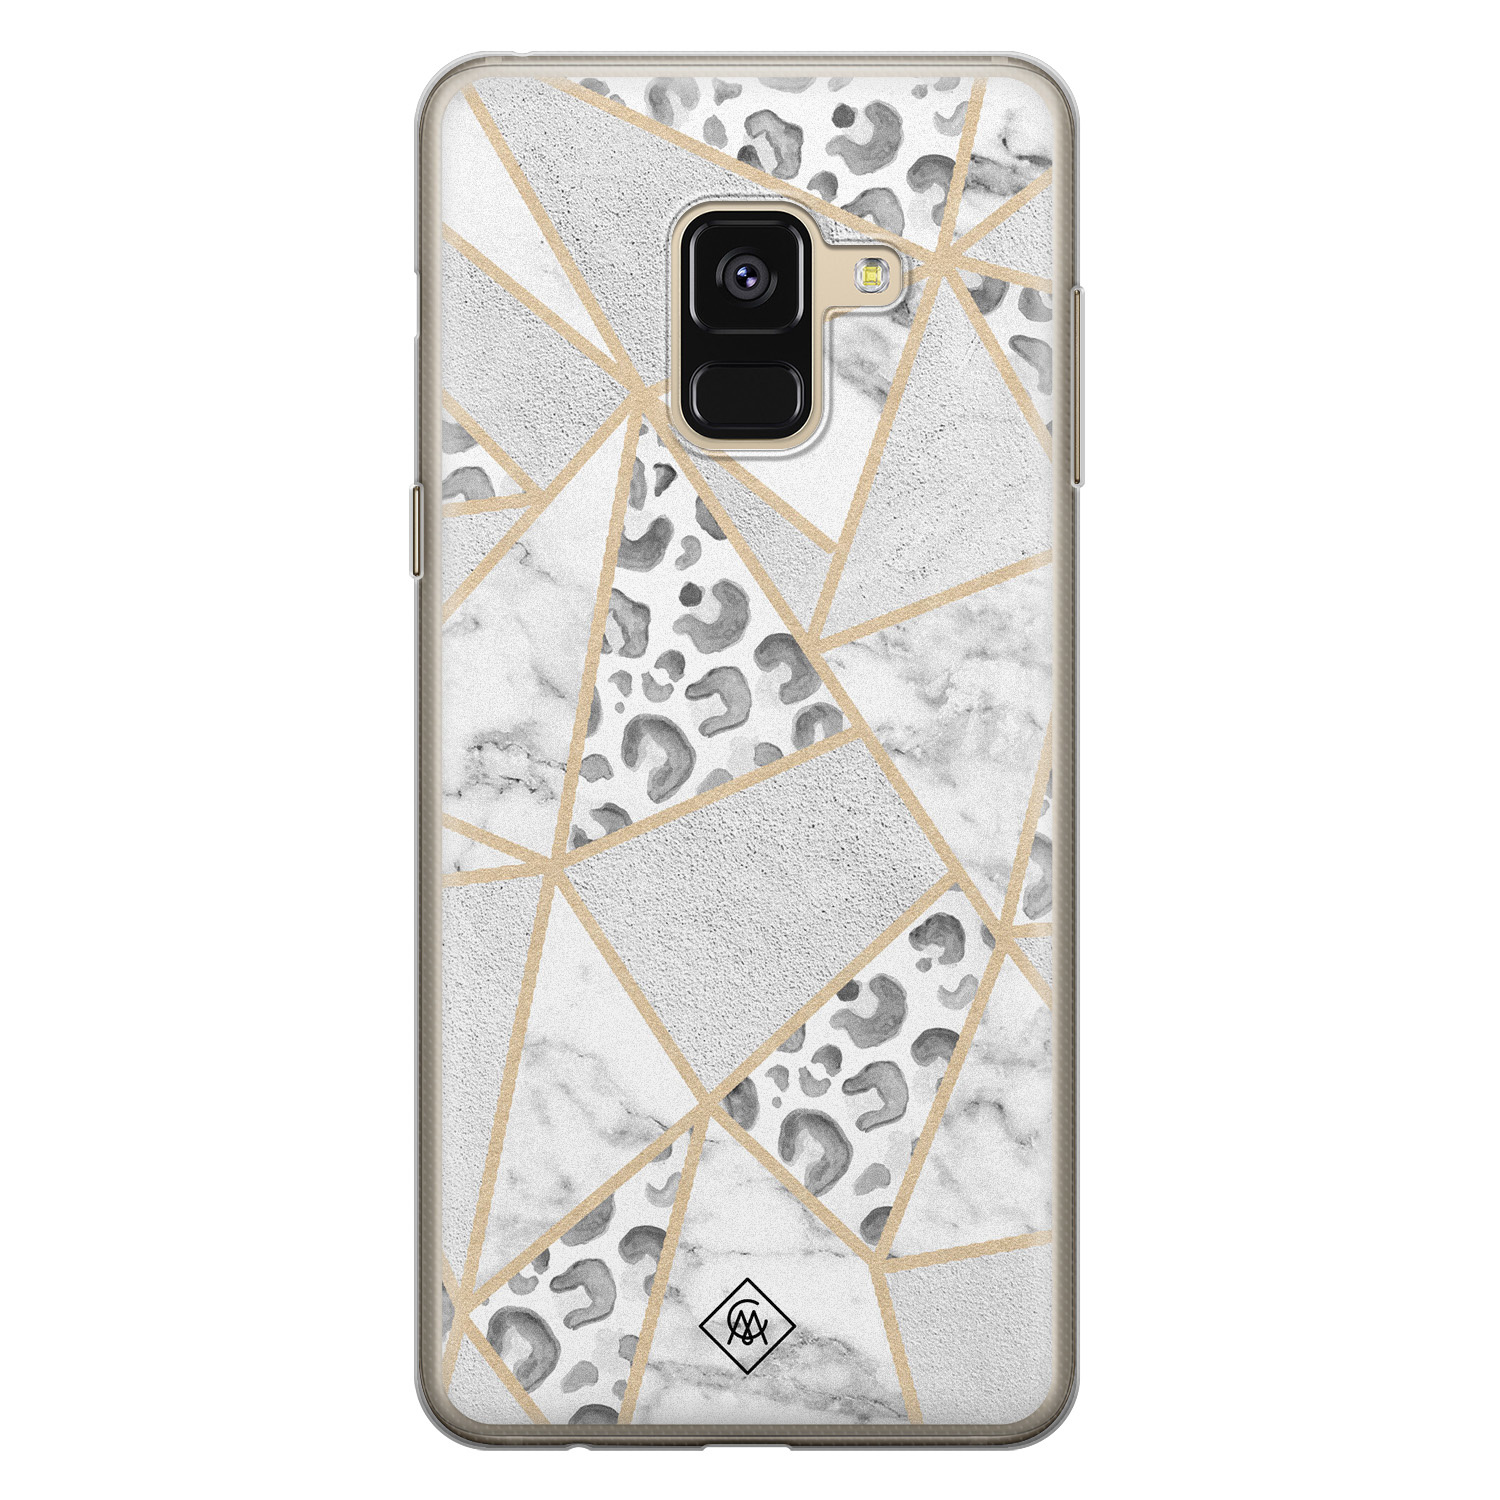 Samsung Galaxy A8 (2018) siliconen telefoonhoesje - Stone & leopard print